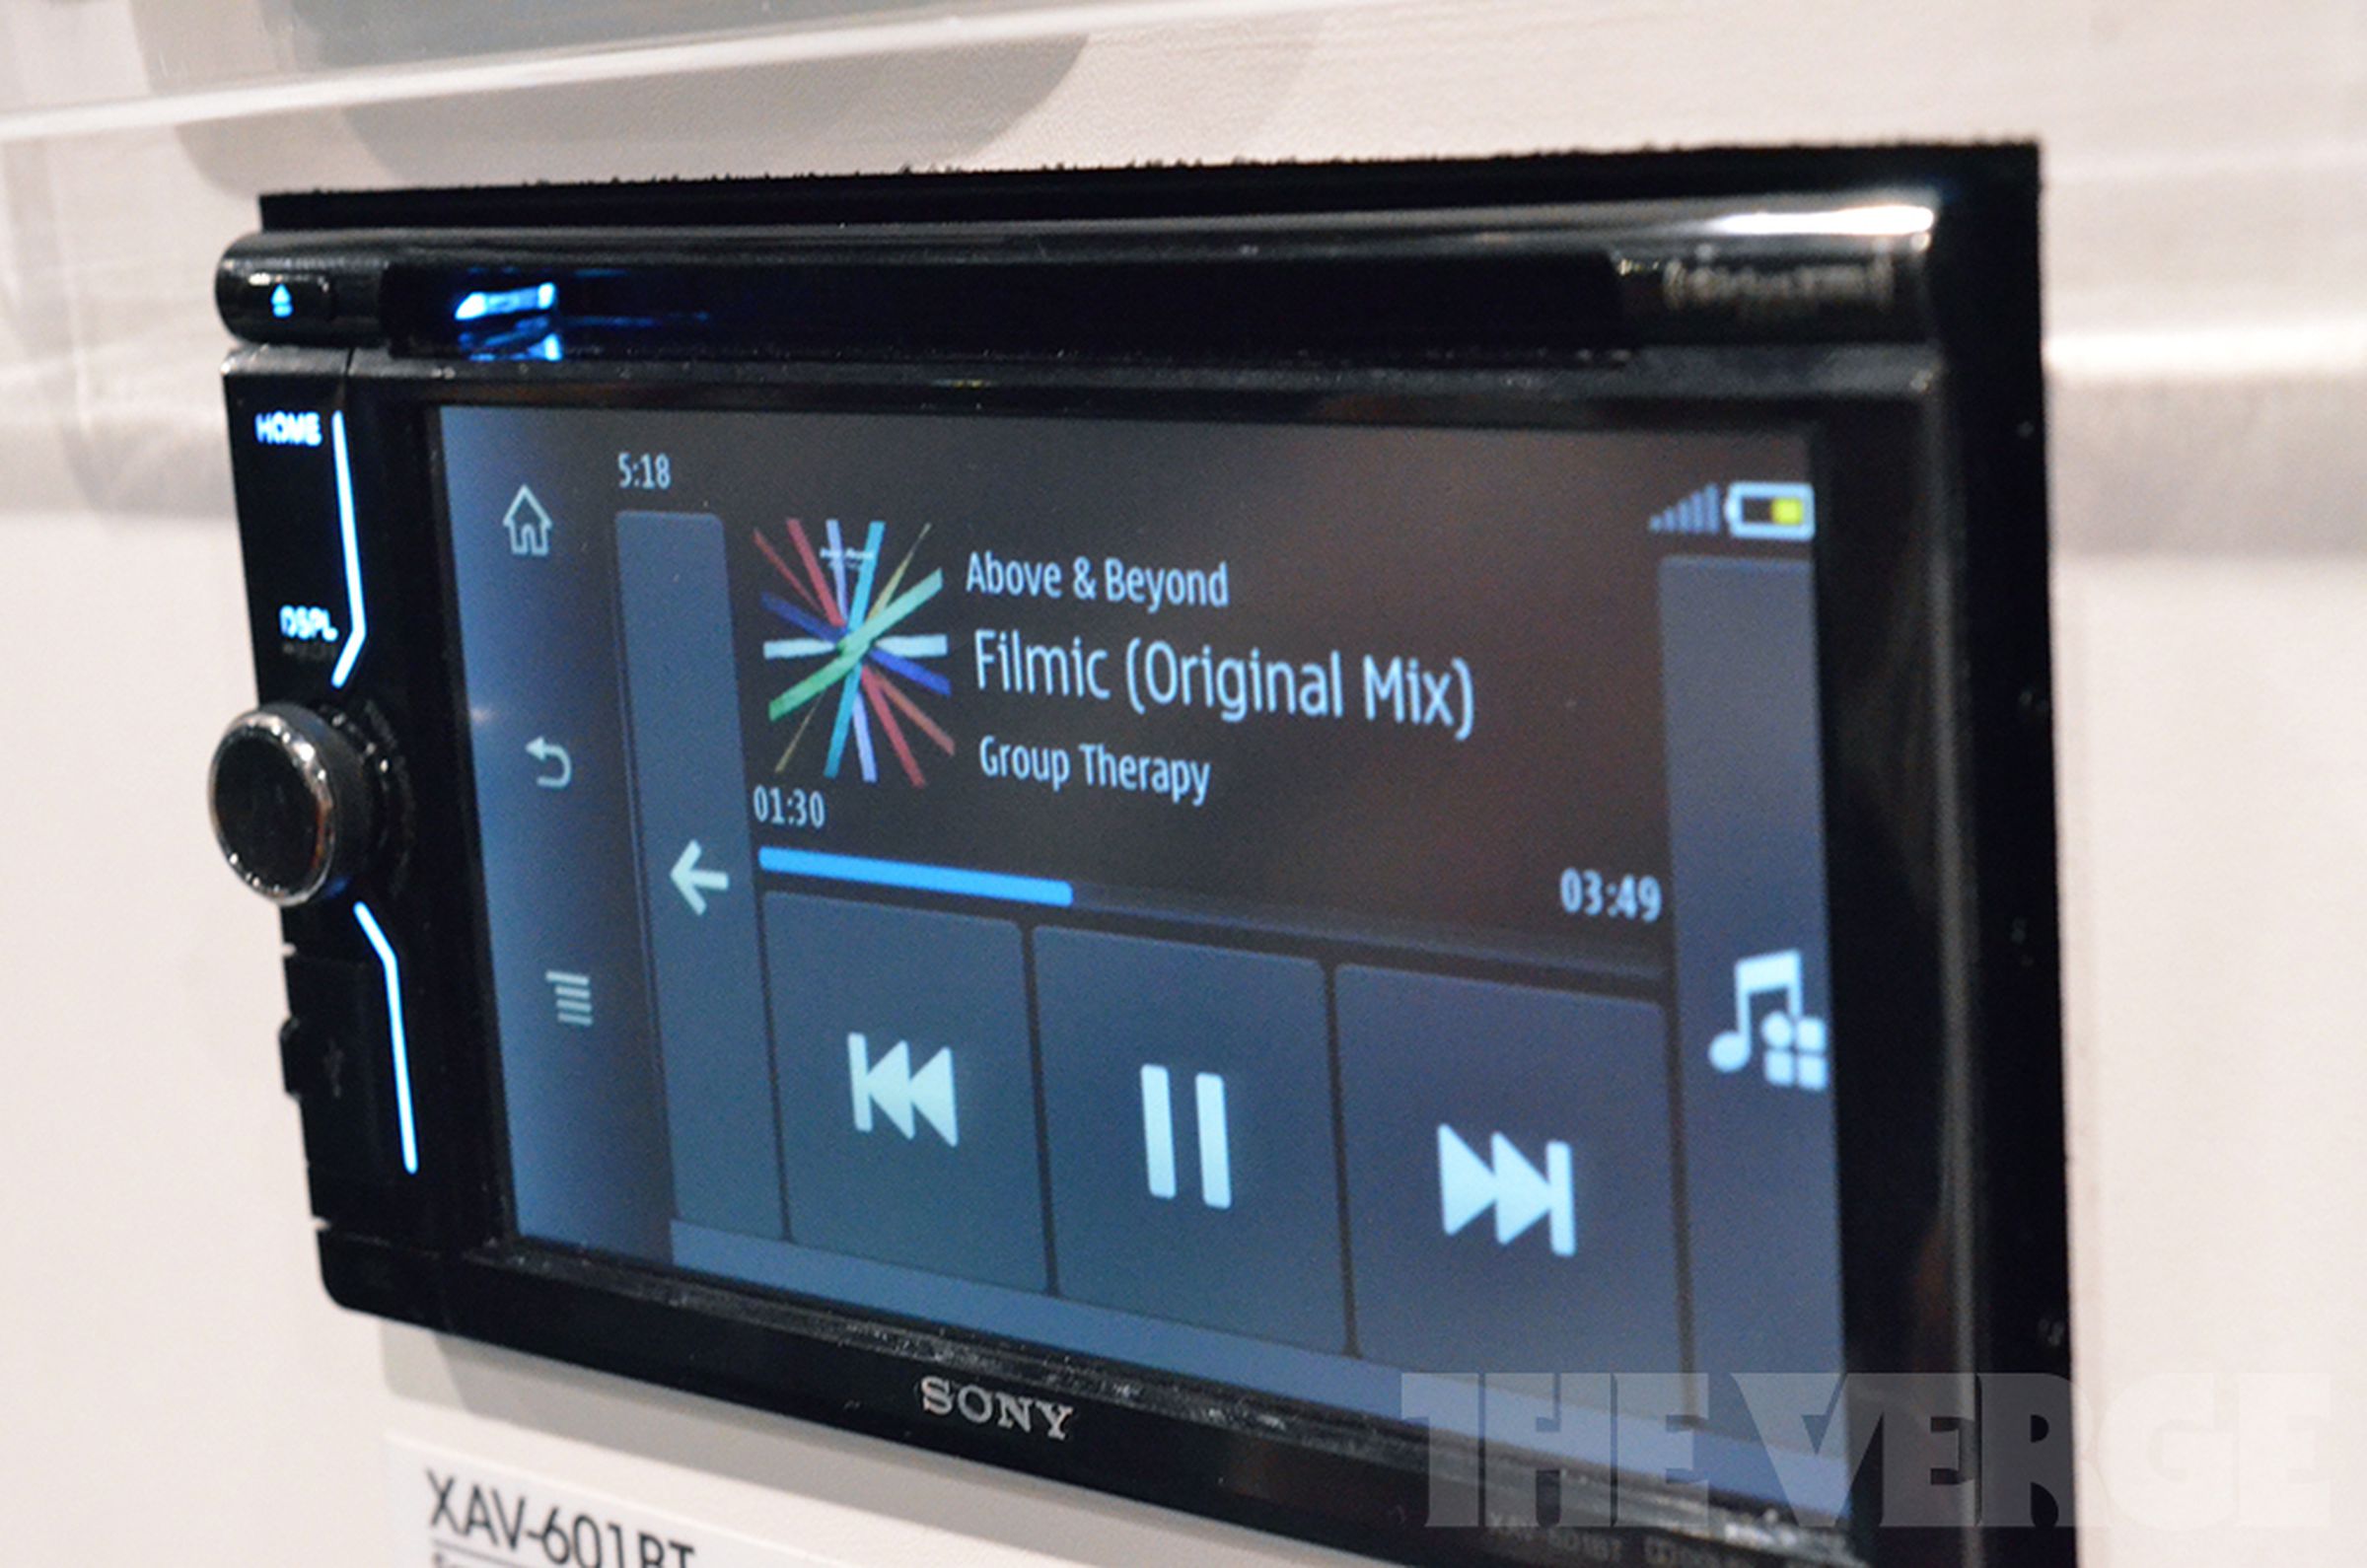 Sony XAV-701HD and XAV-601BT MirrorLink car stereo units hands-on photos